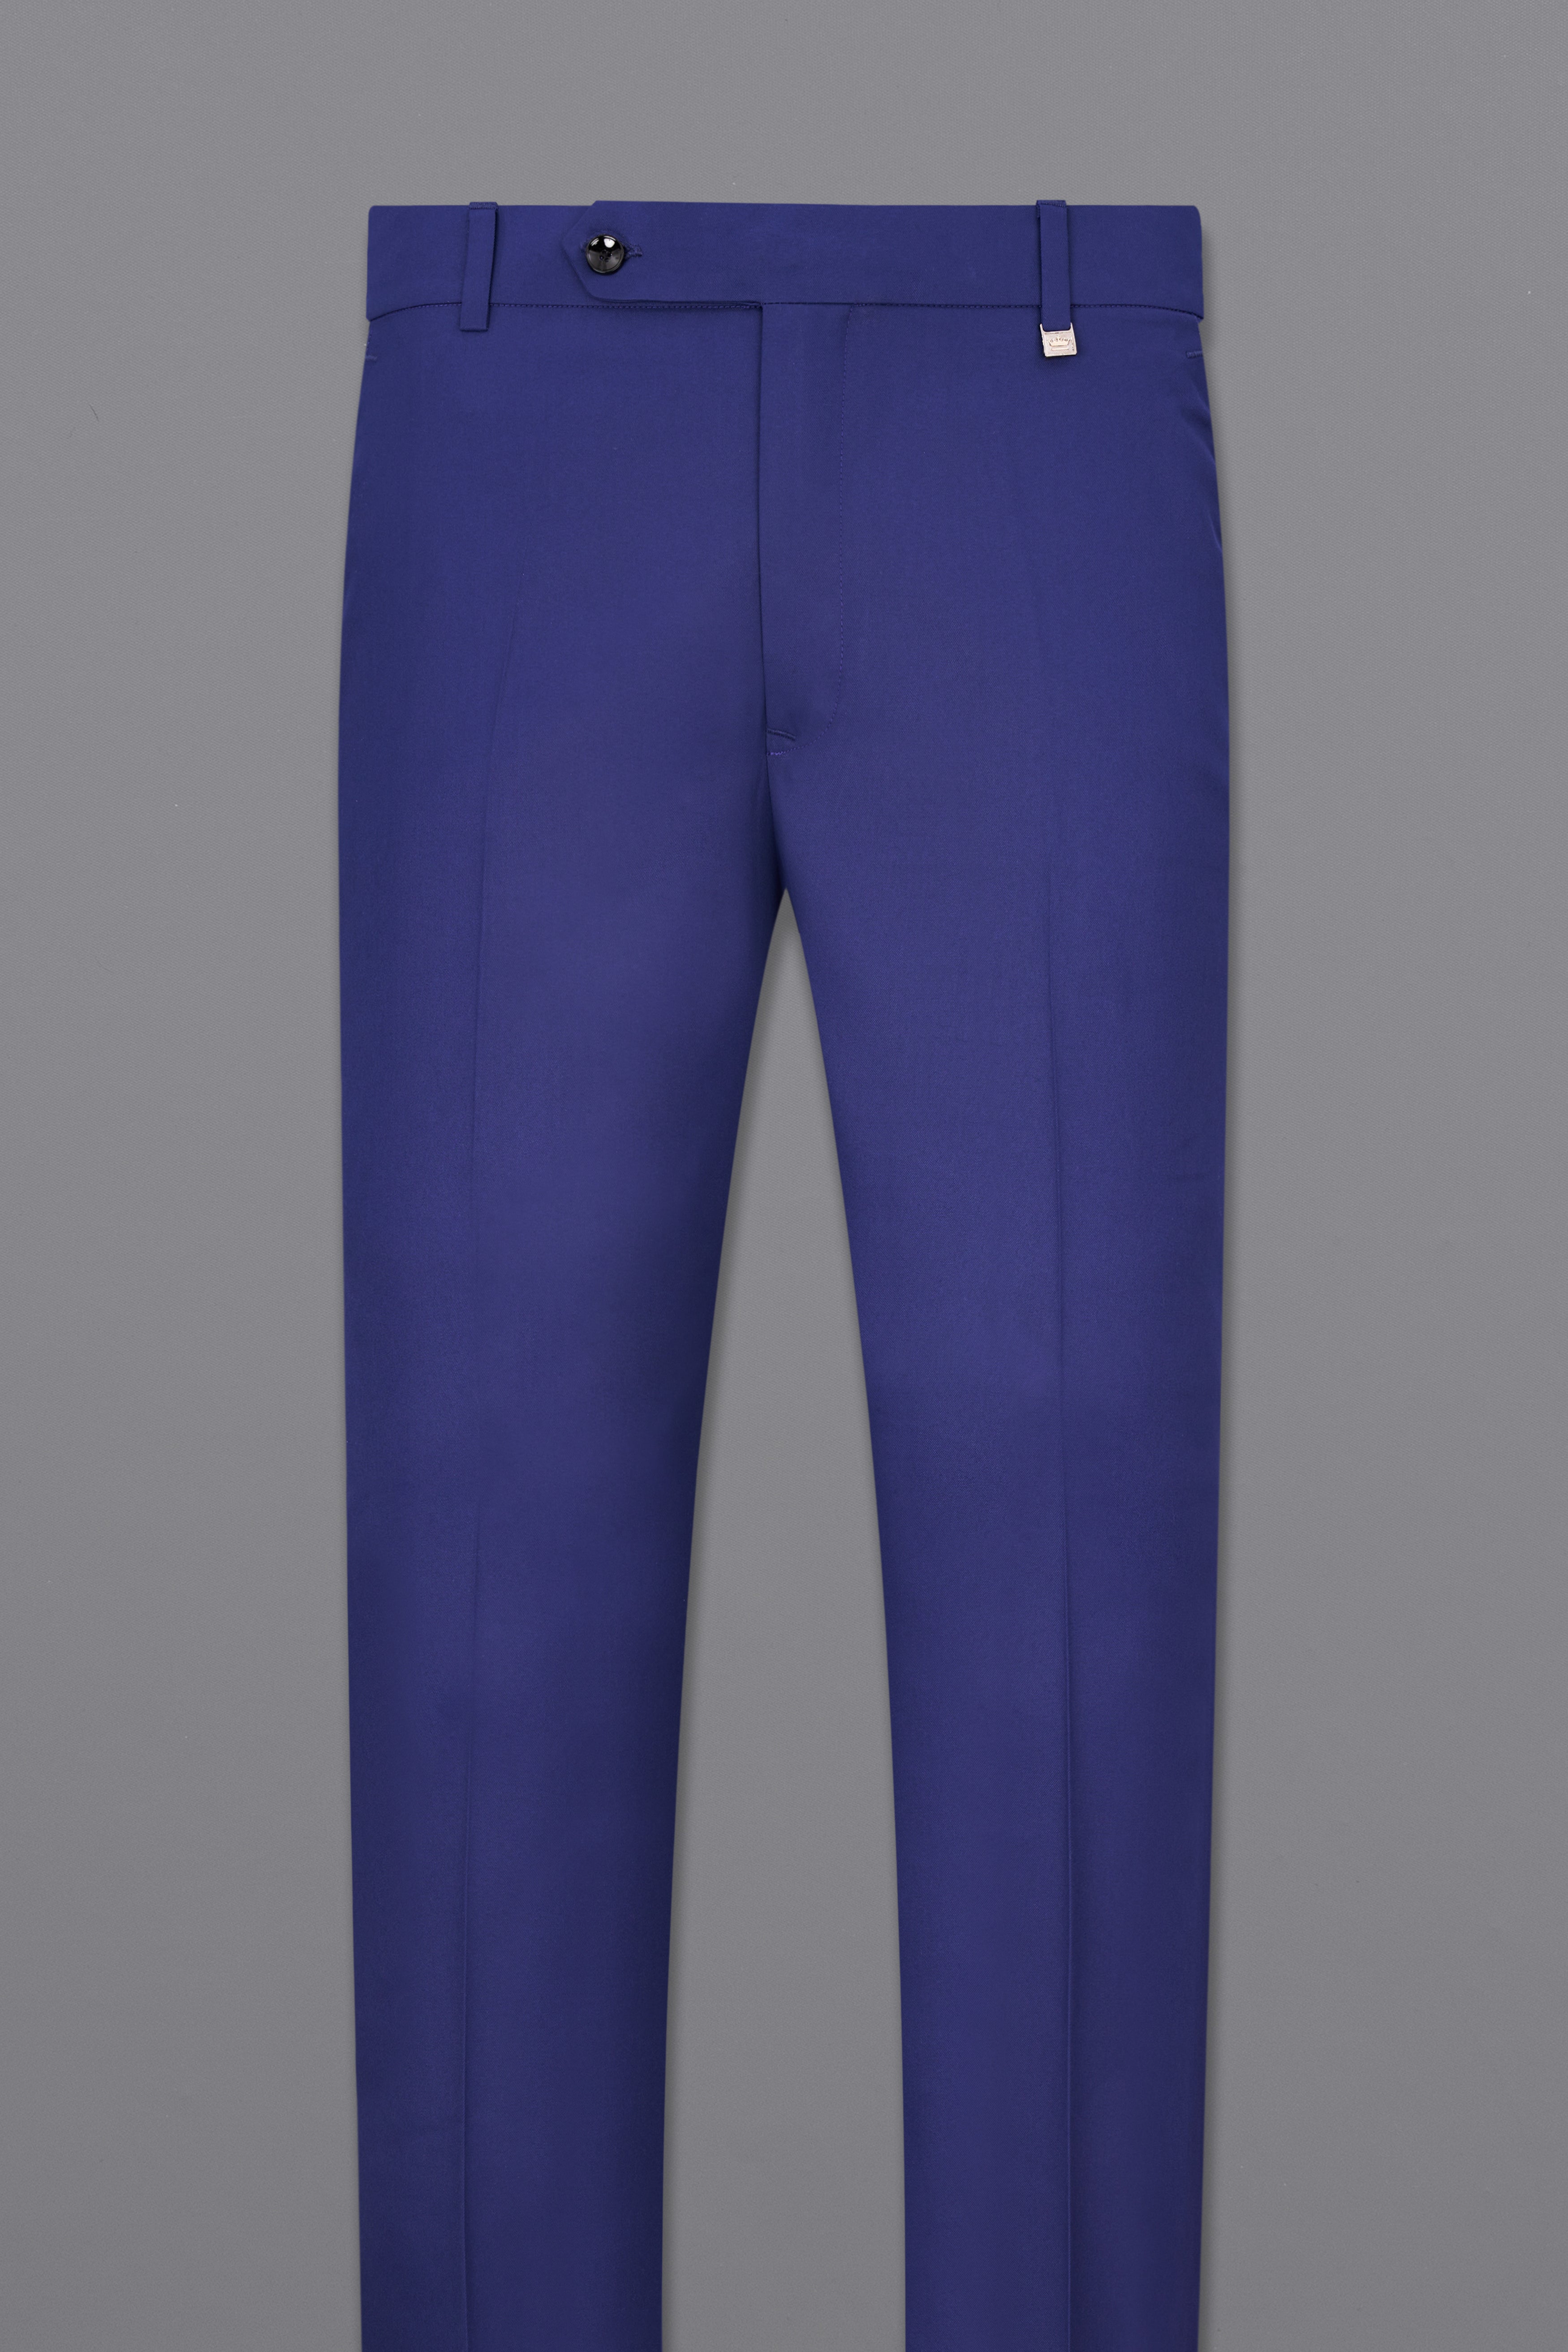 Royal Blue Pants